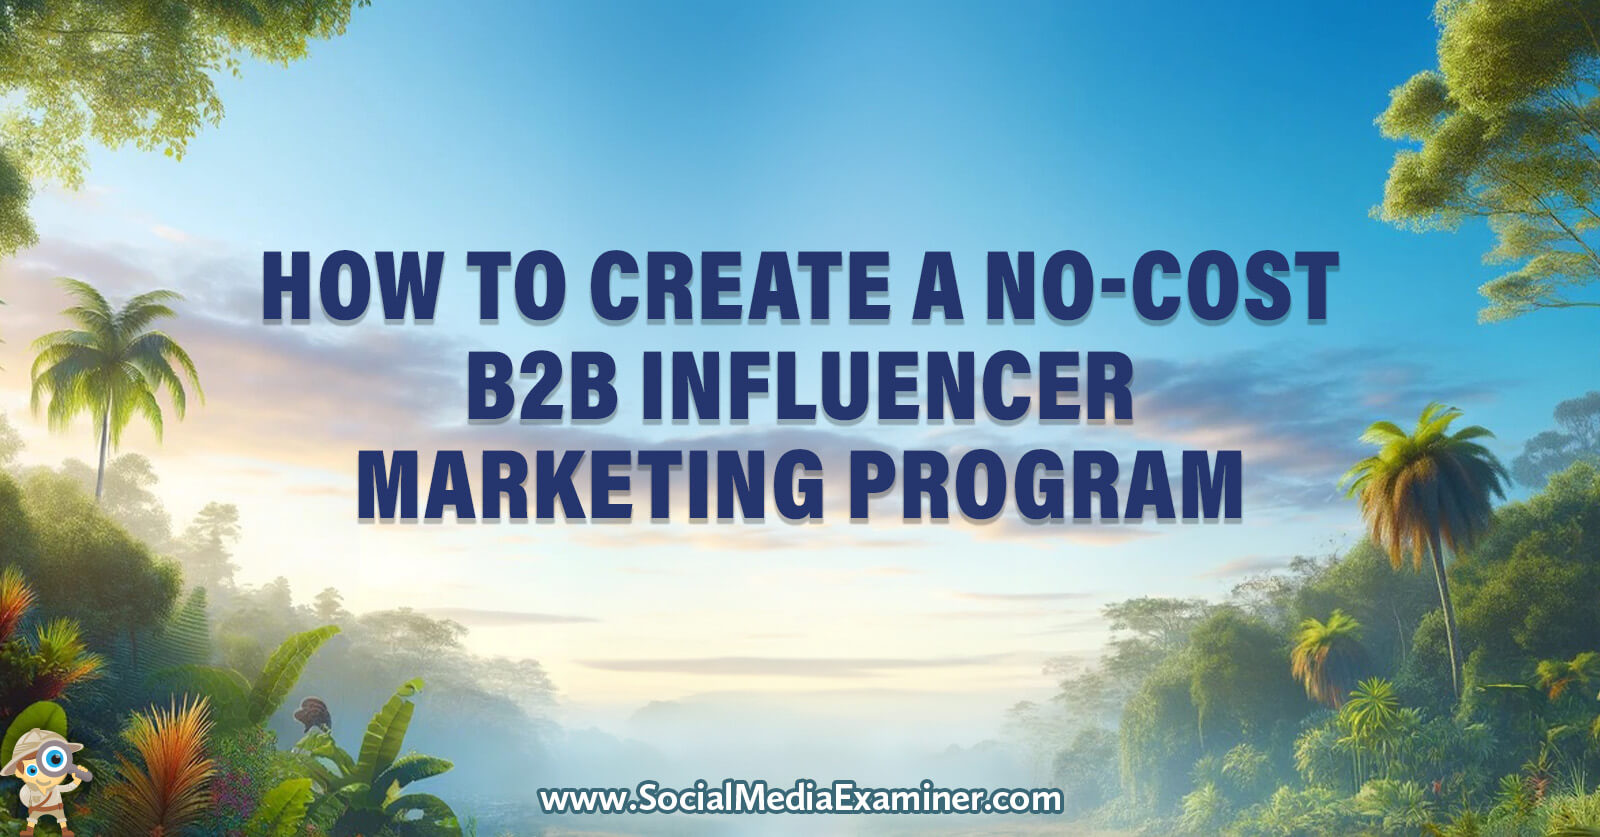 How to Create a No-Cost B2B Influencer Marketing Program by Social Media Examiner